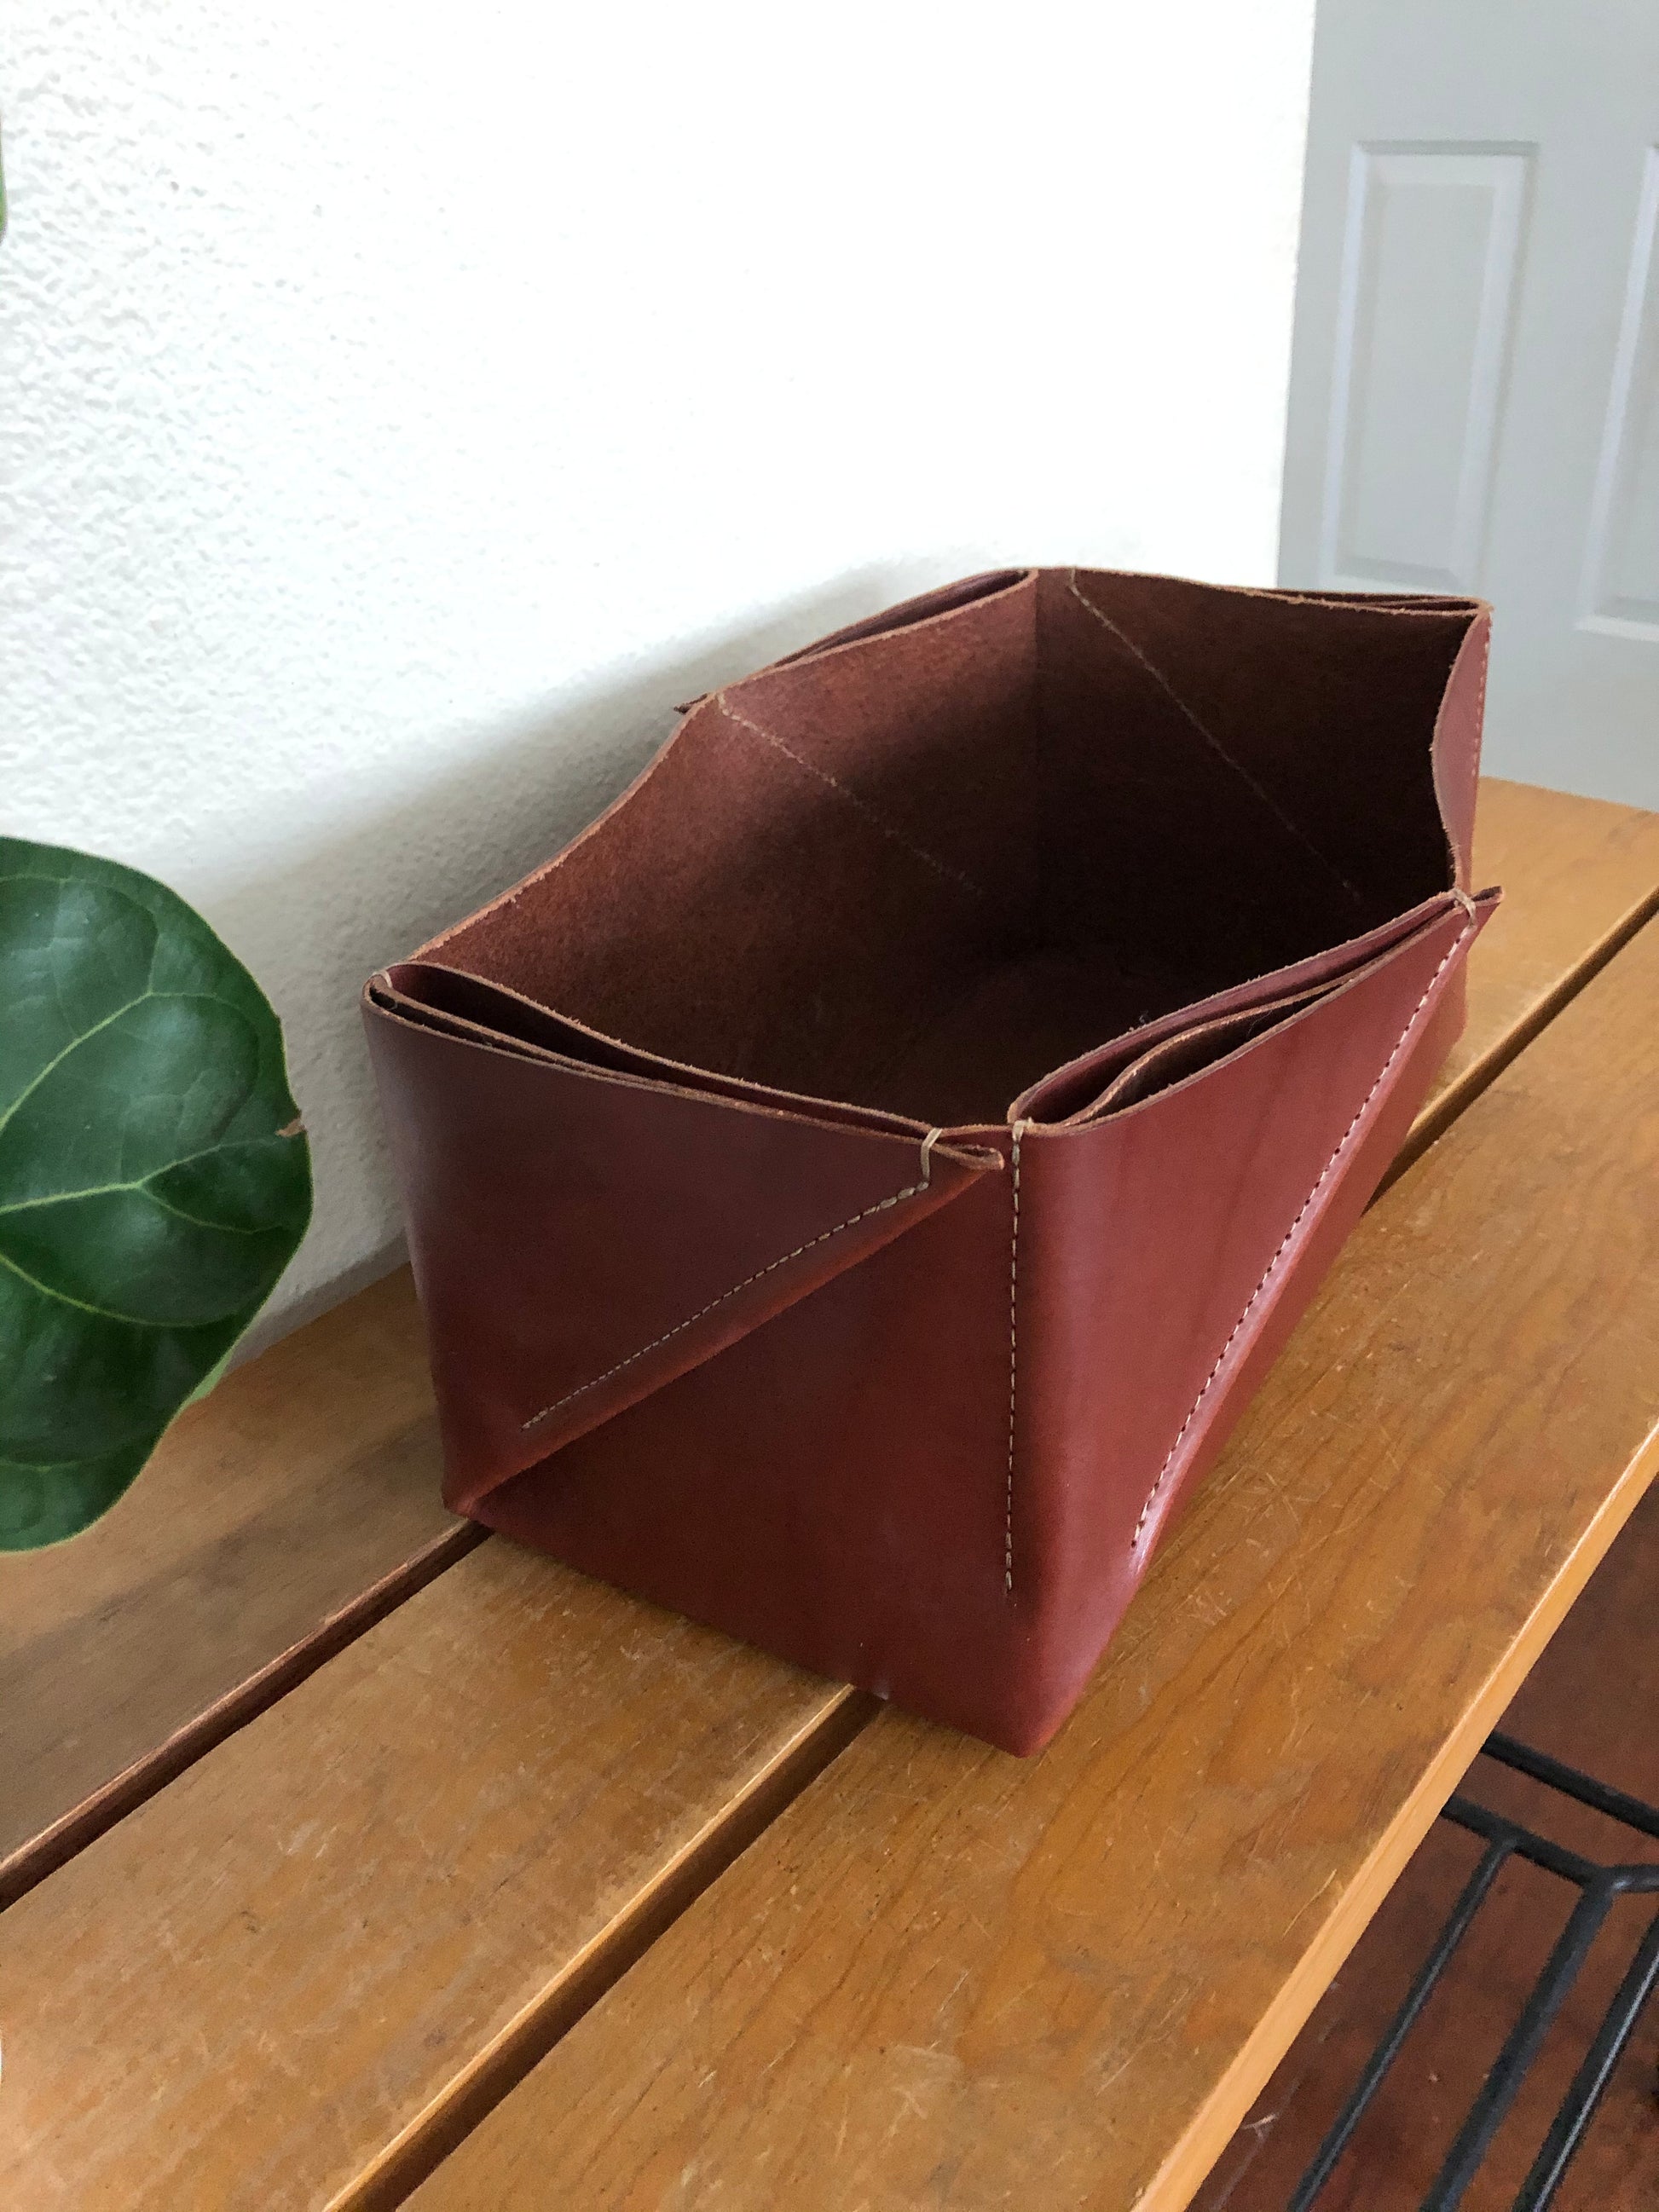 Organic shape of folded leather box decorates entryway table.